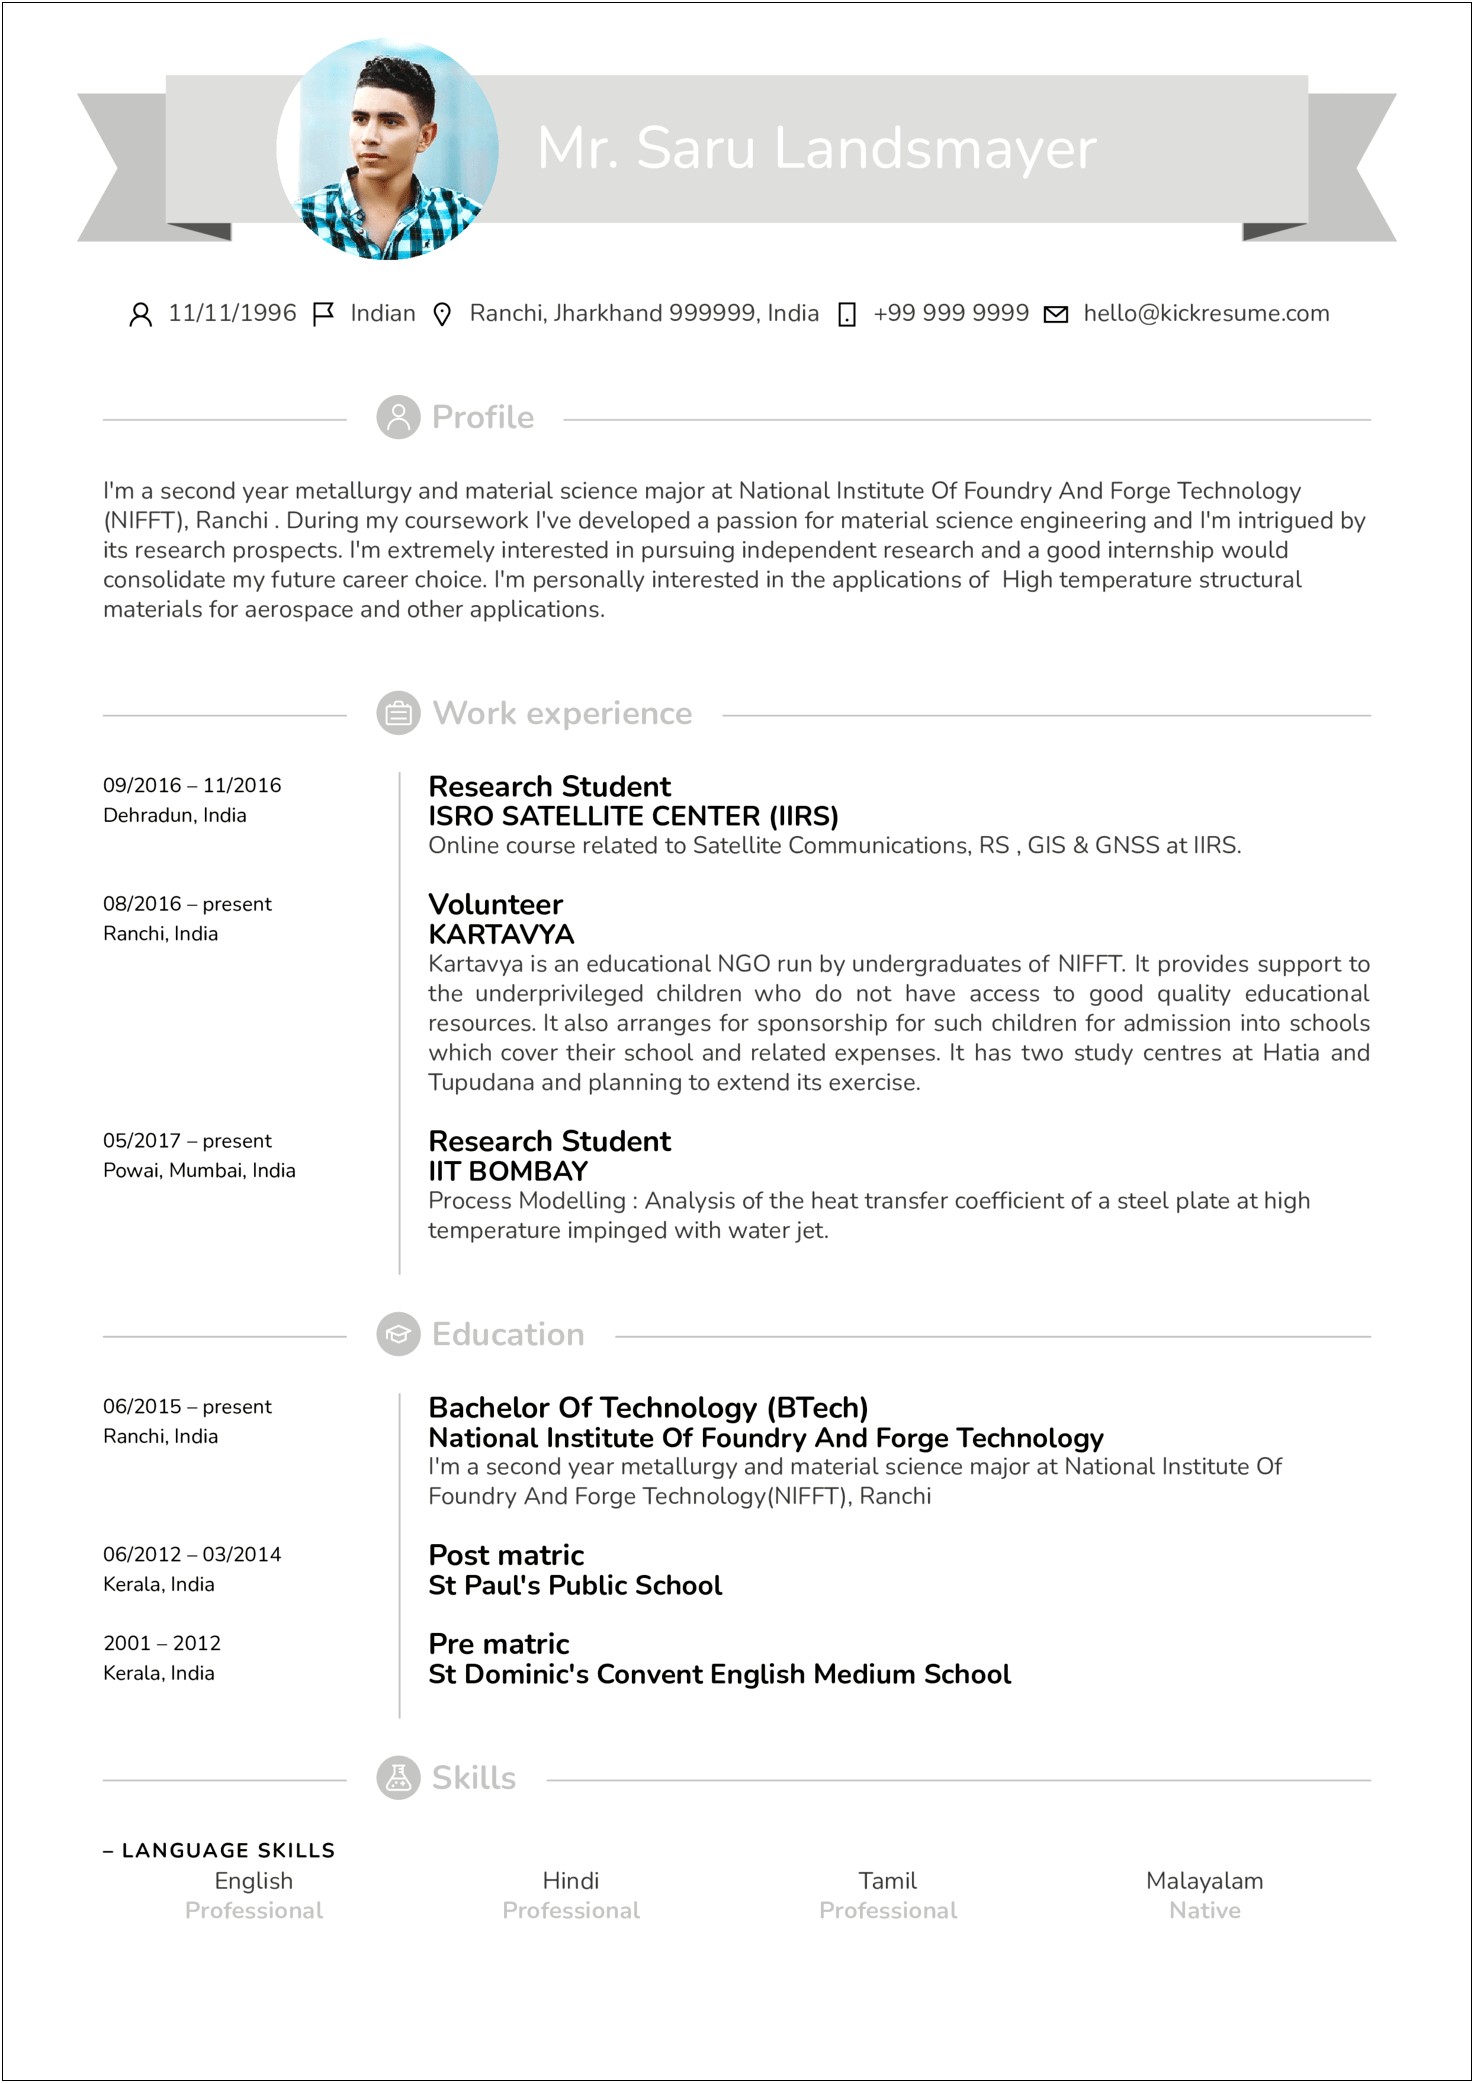 Sample Of Resume Templates Medical Internship